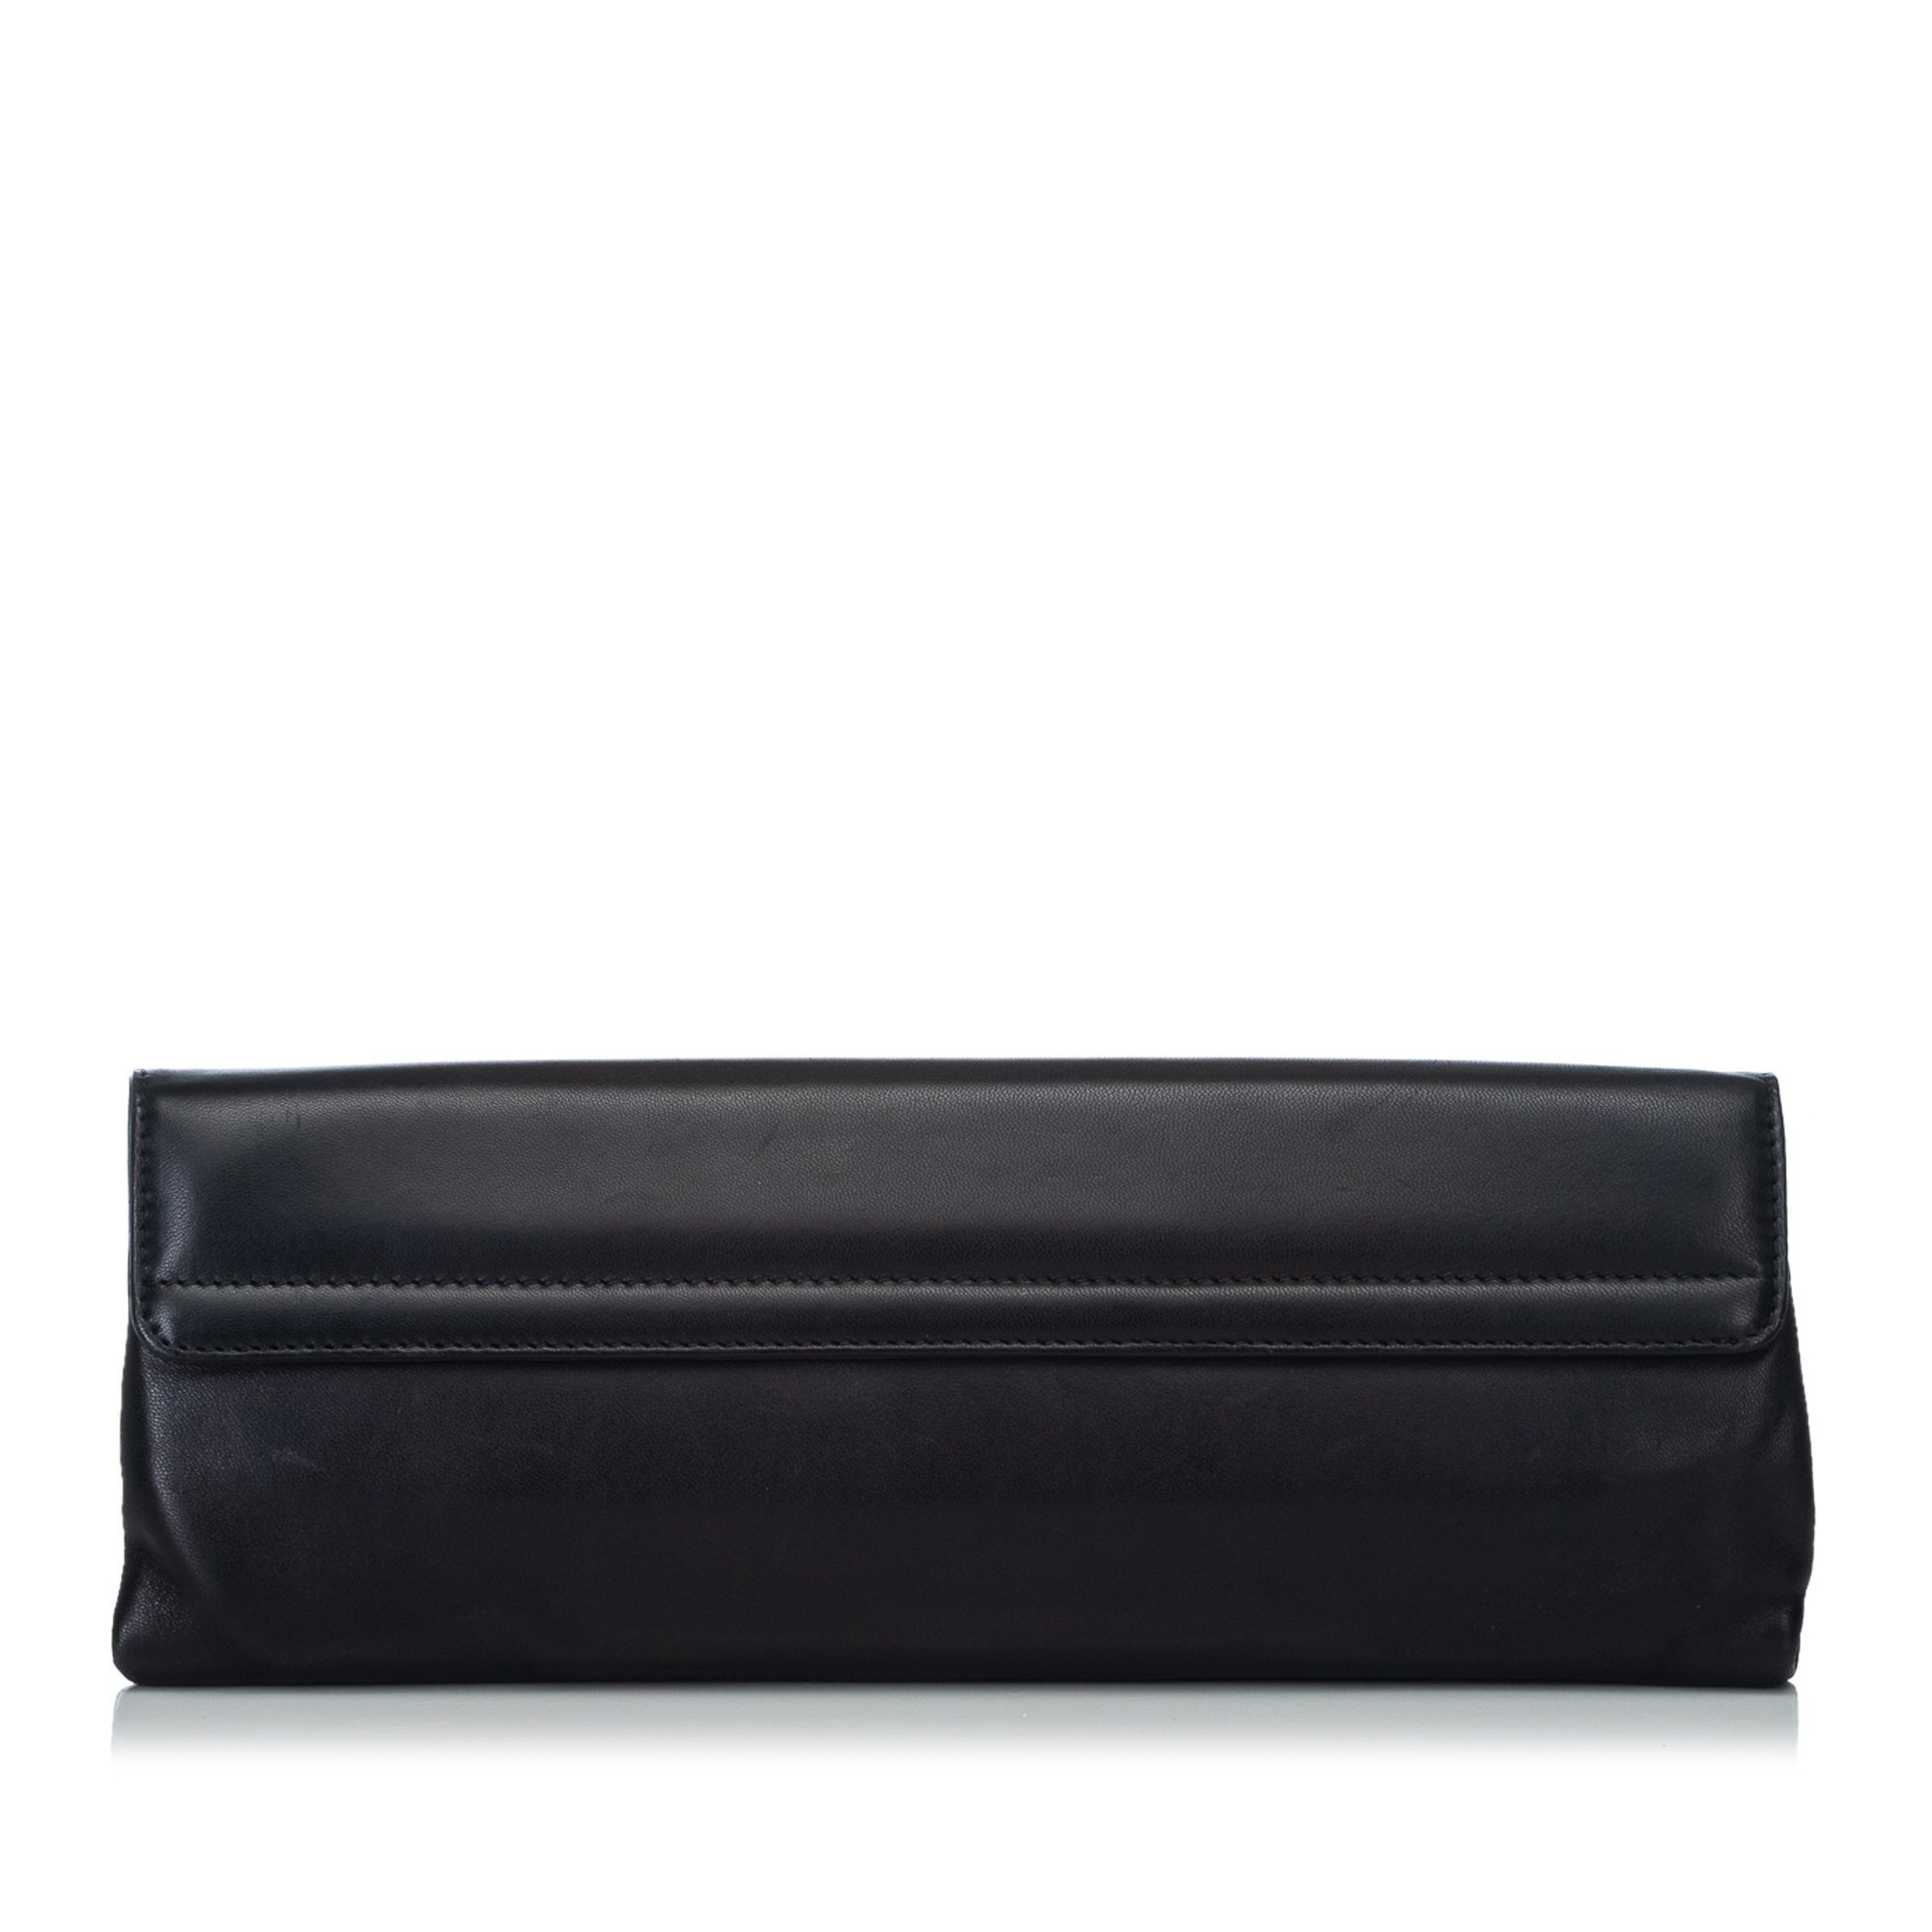 Fendi Leather Clutch Bag - Image 2 of 11